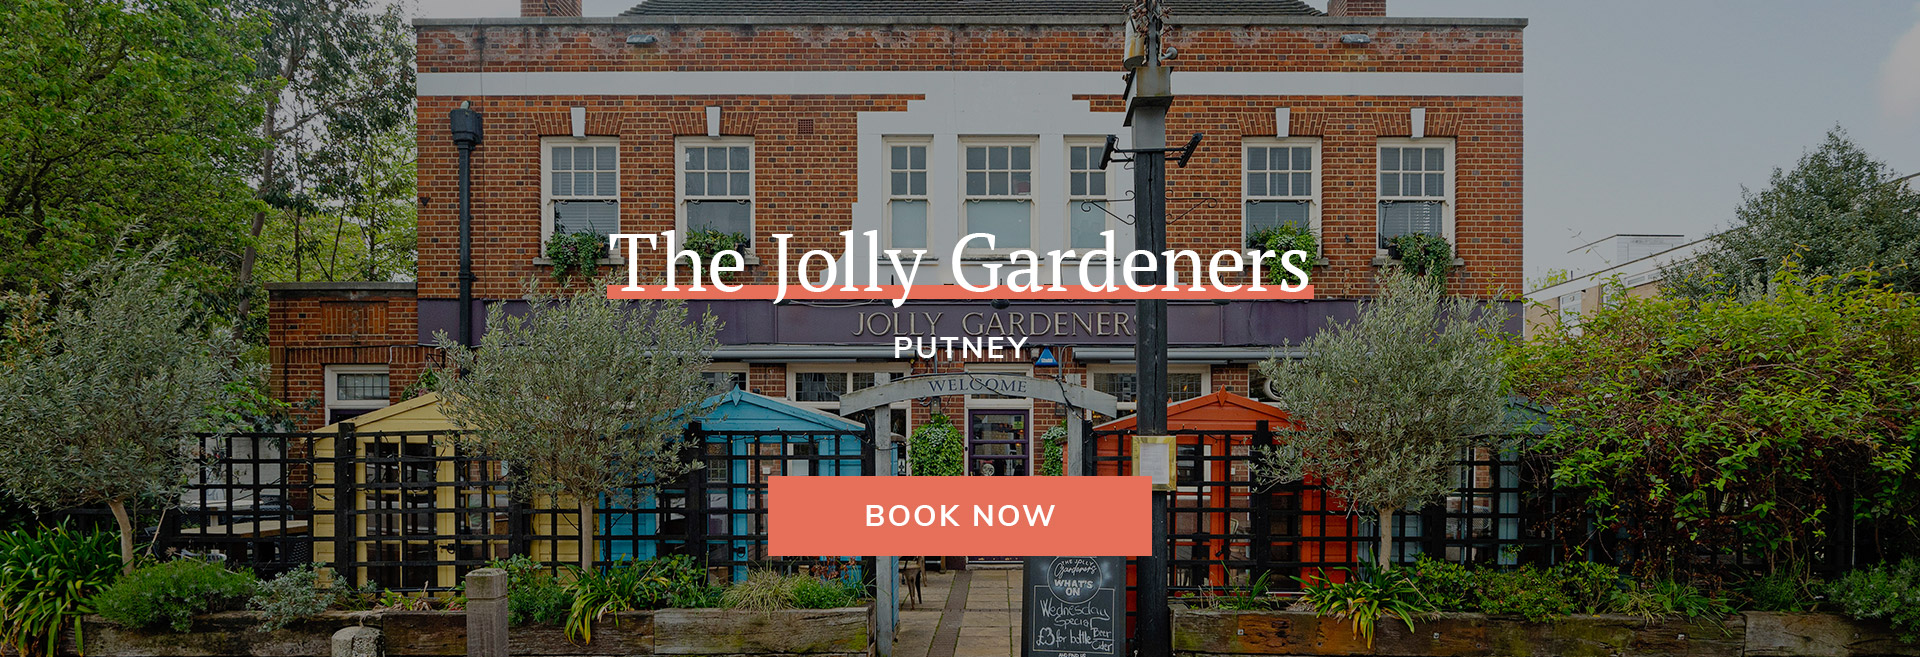 The Jolly Gardeners Banner 1